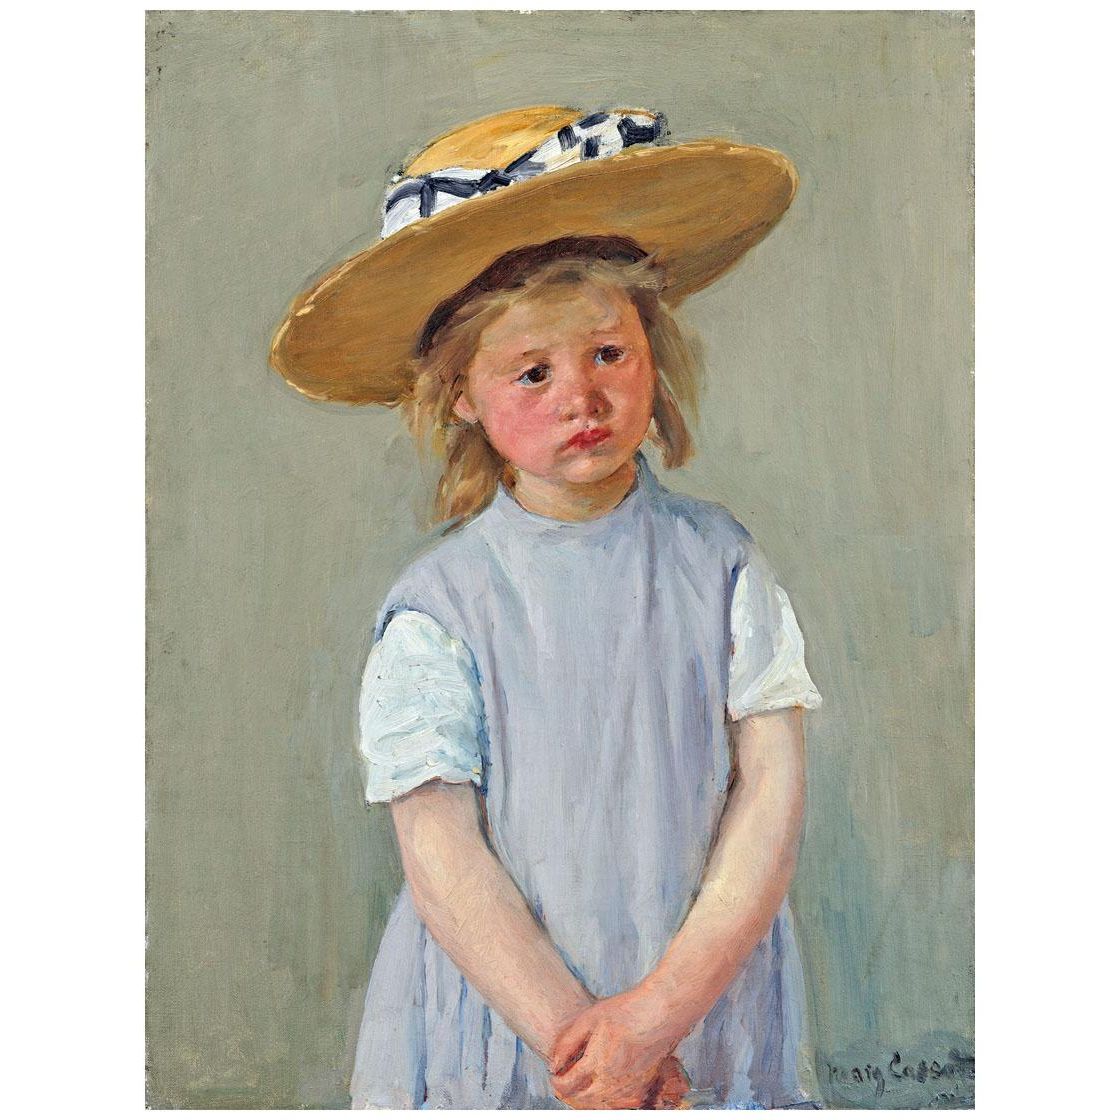 Mary Cassatt. Child in a Straw Hat. 1886. National Gallery Washington